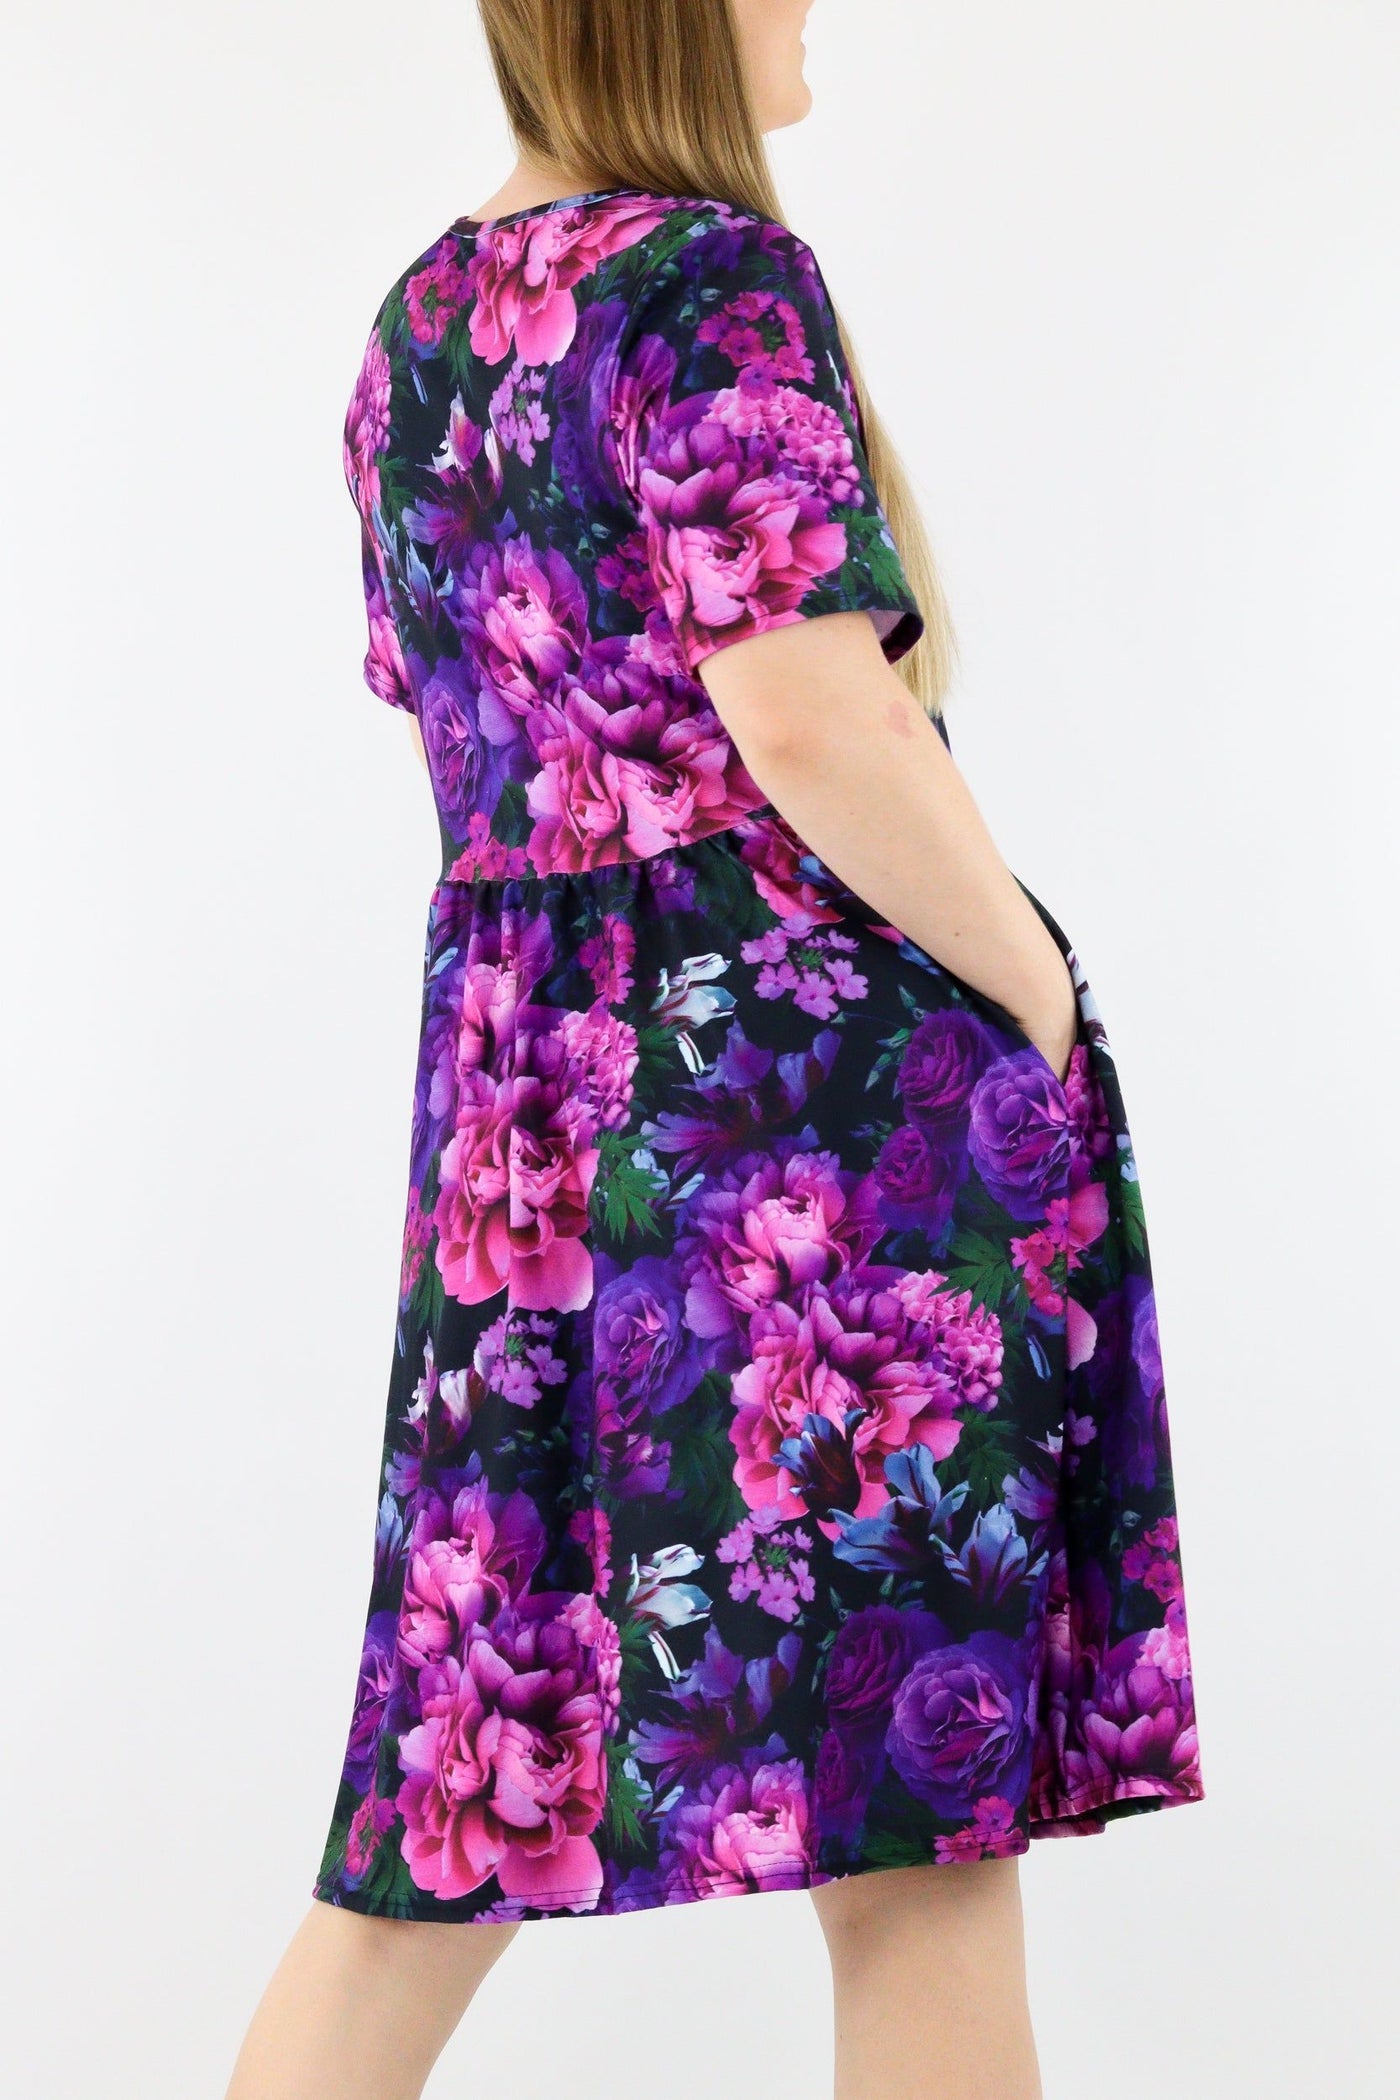 Serenity Flora - Short Sleeve Skater Dress - Knee Length - Side Pockets Knee Length Skater Dress Pawlie   